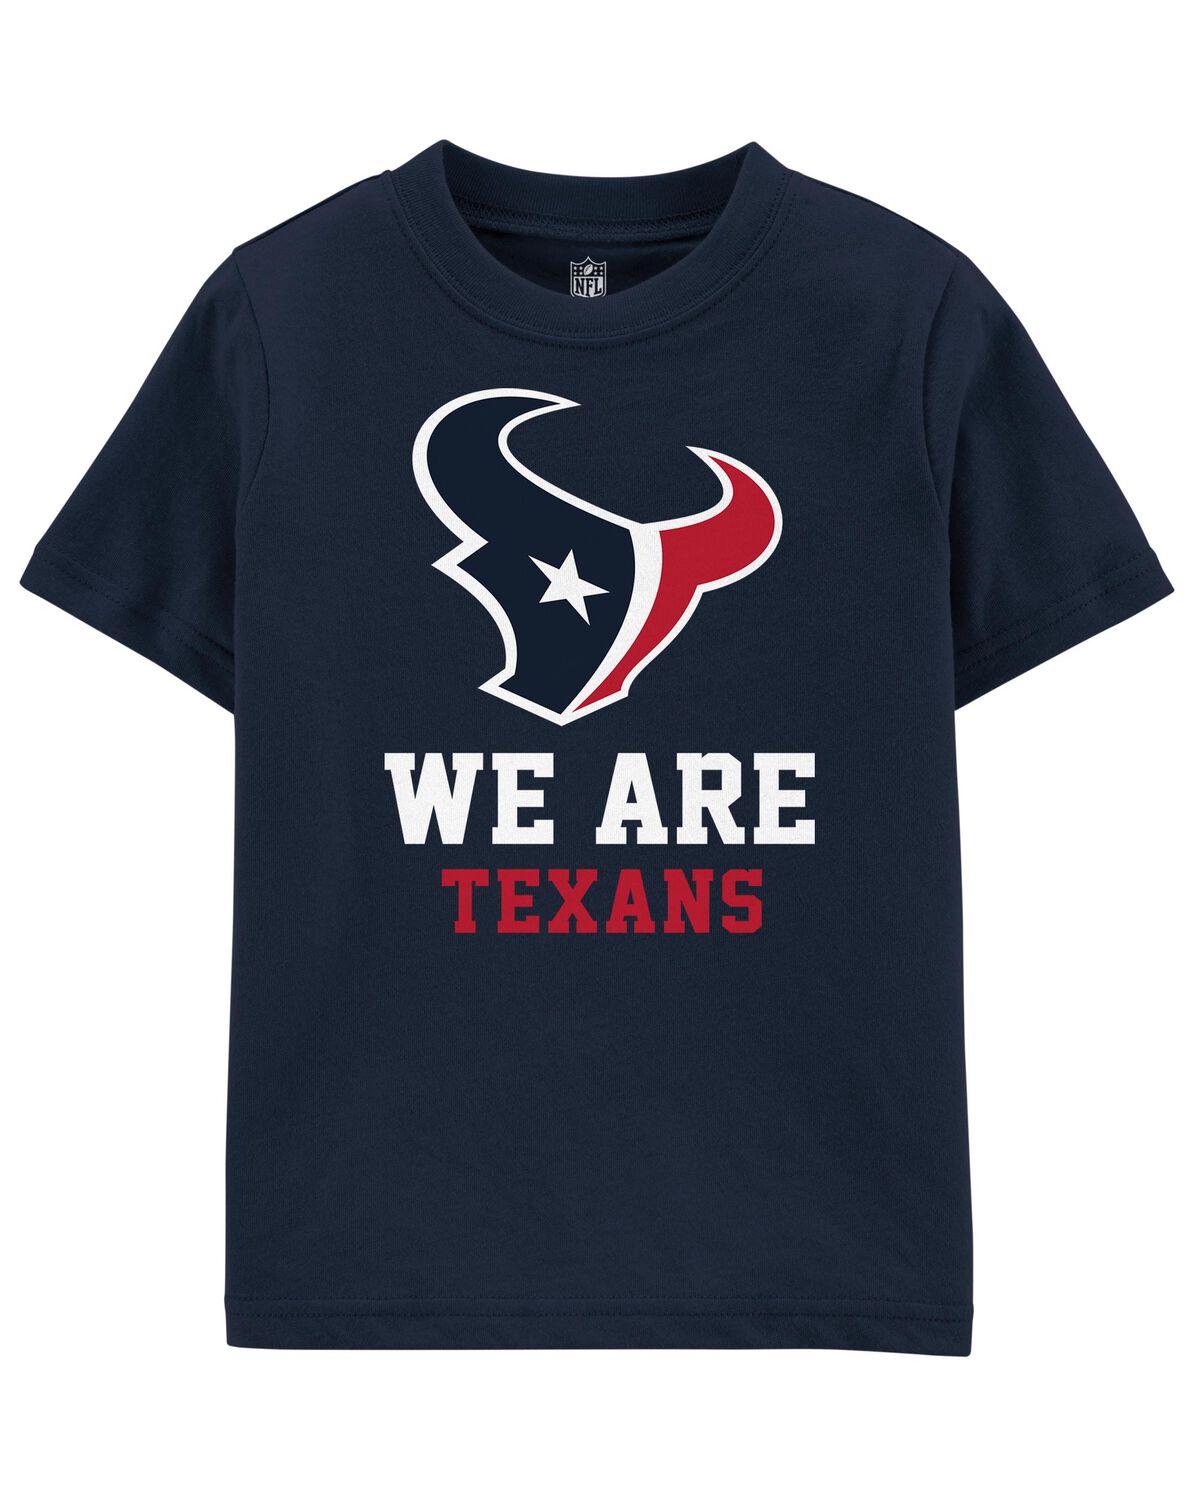 Toddler NFL Houston Texans Tee